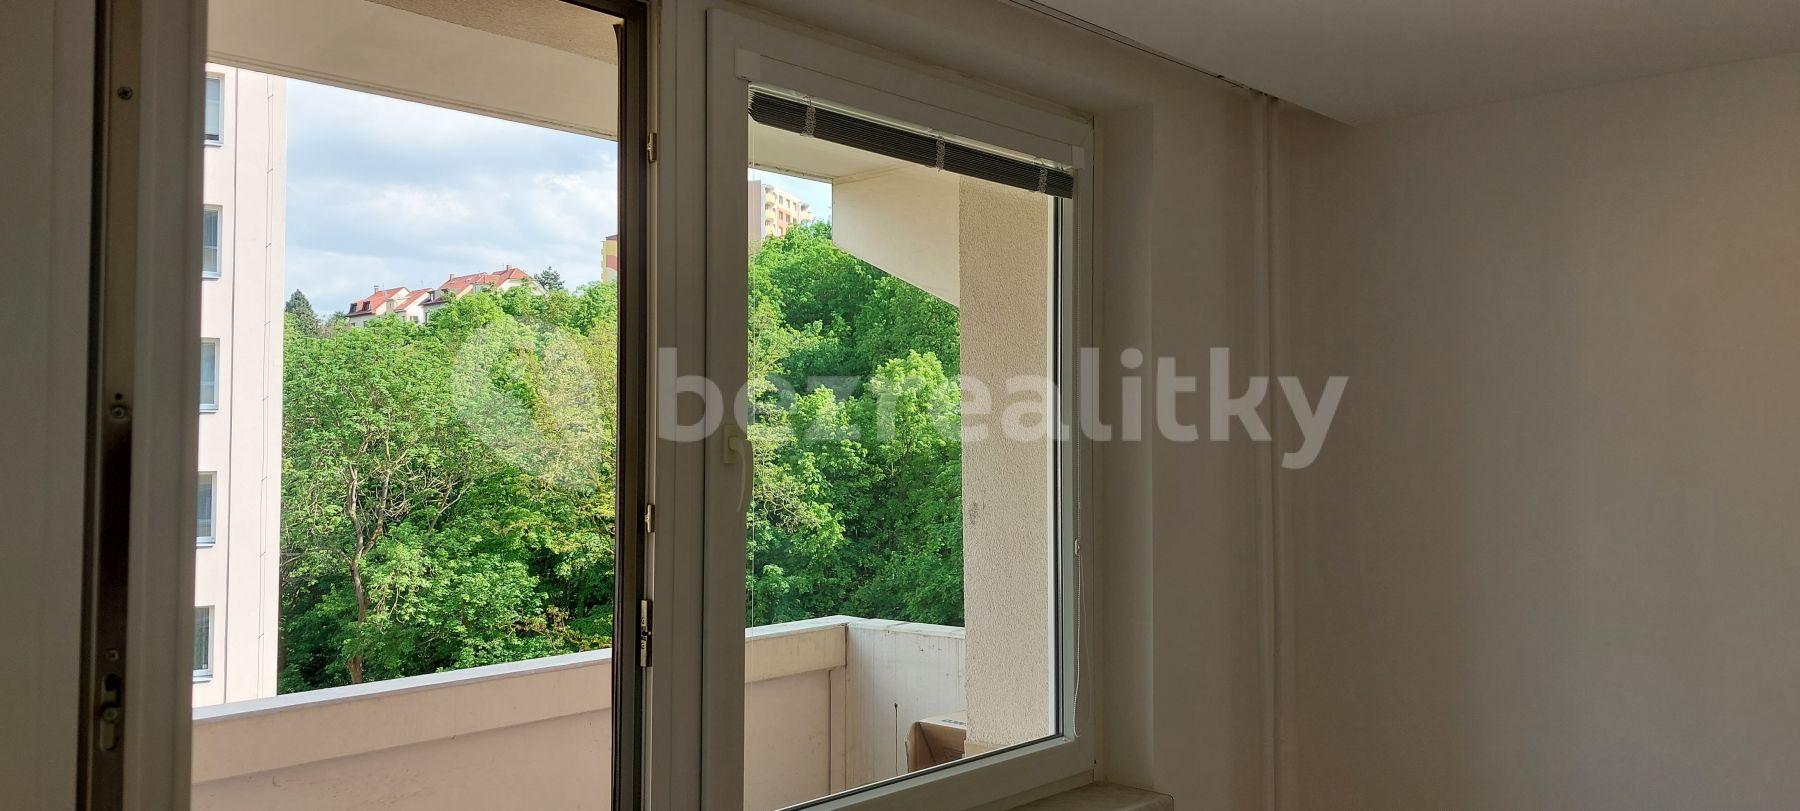 1 bedroom flat to rent, 32 m², Ulička, Brno, Jihomoravský Region